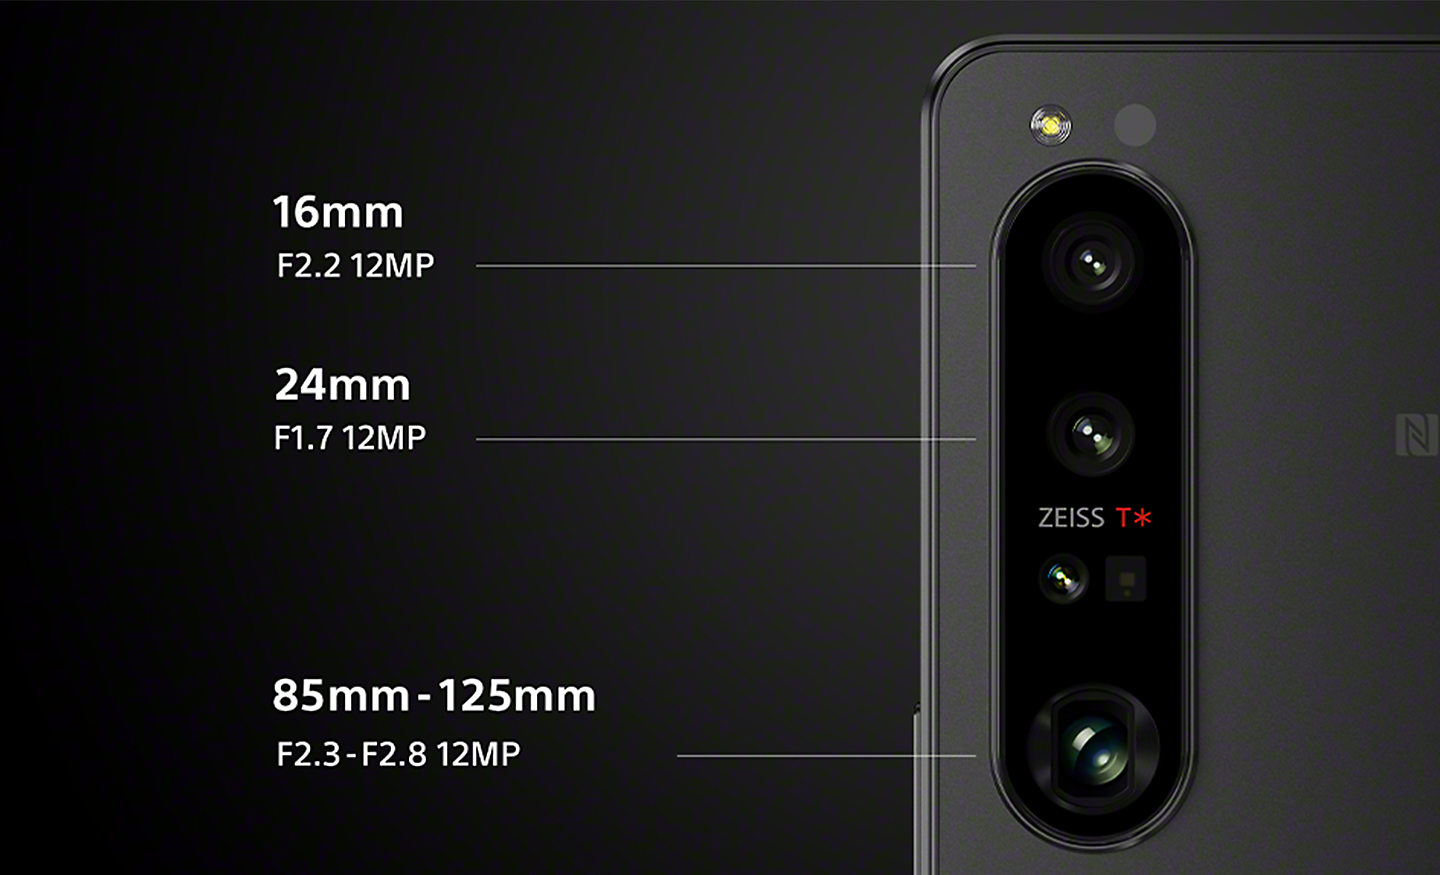 Primer plano de la cámara de triple objetivo del Xperia 1 IV con comentarios para 16 mm F2.2 12 MP, 24 mm F1.7 12 MP y 85 mm-125 mm F2.3-F2.8 12 MP